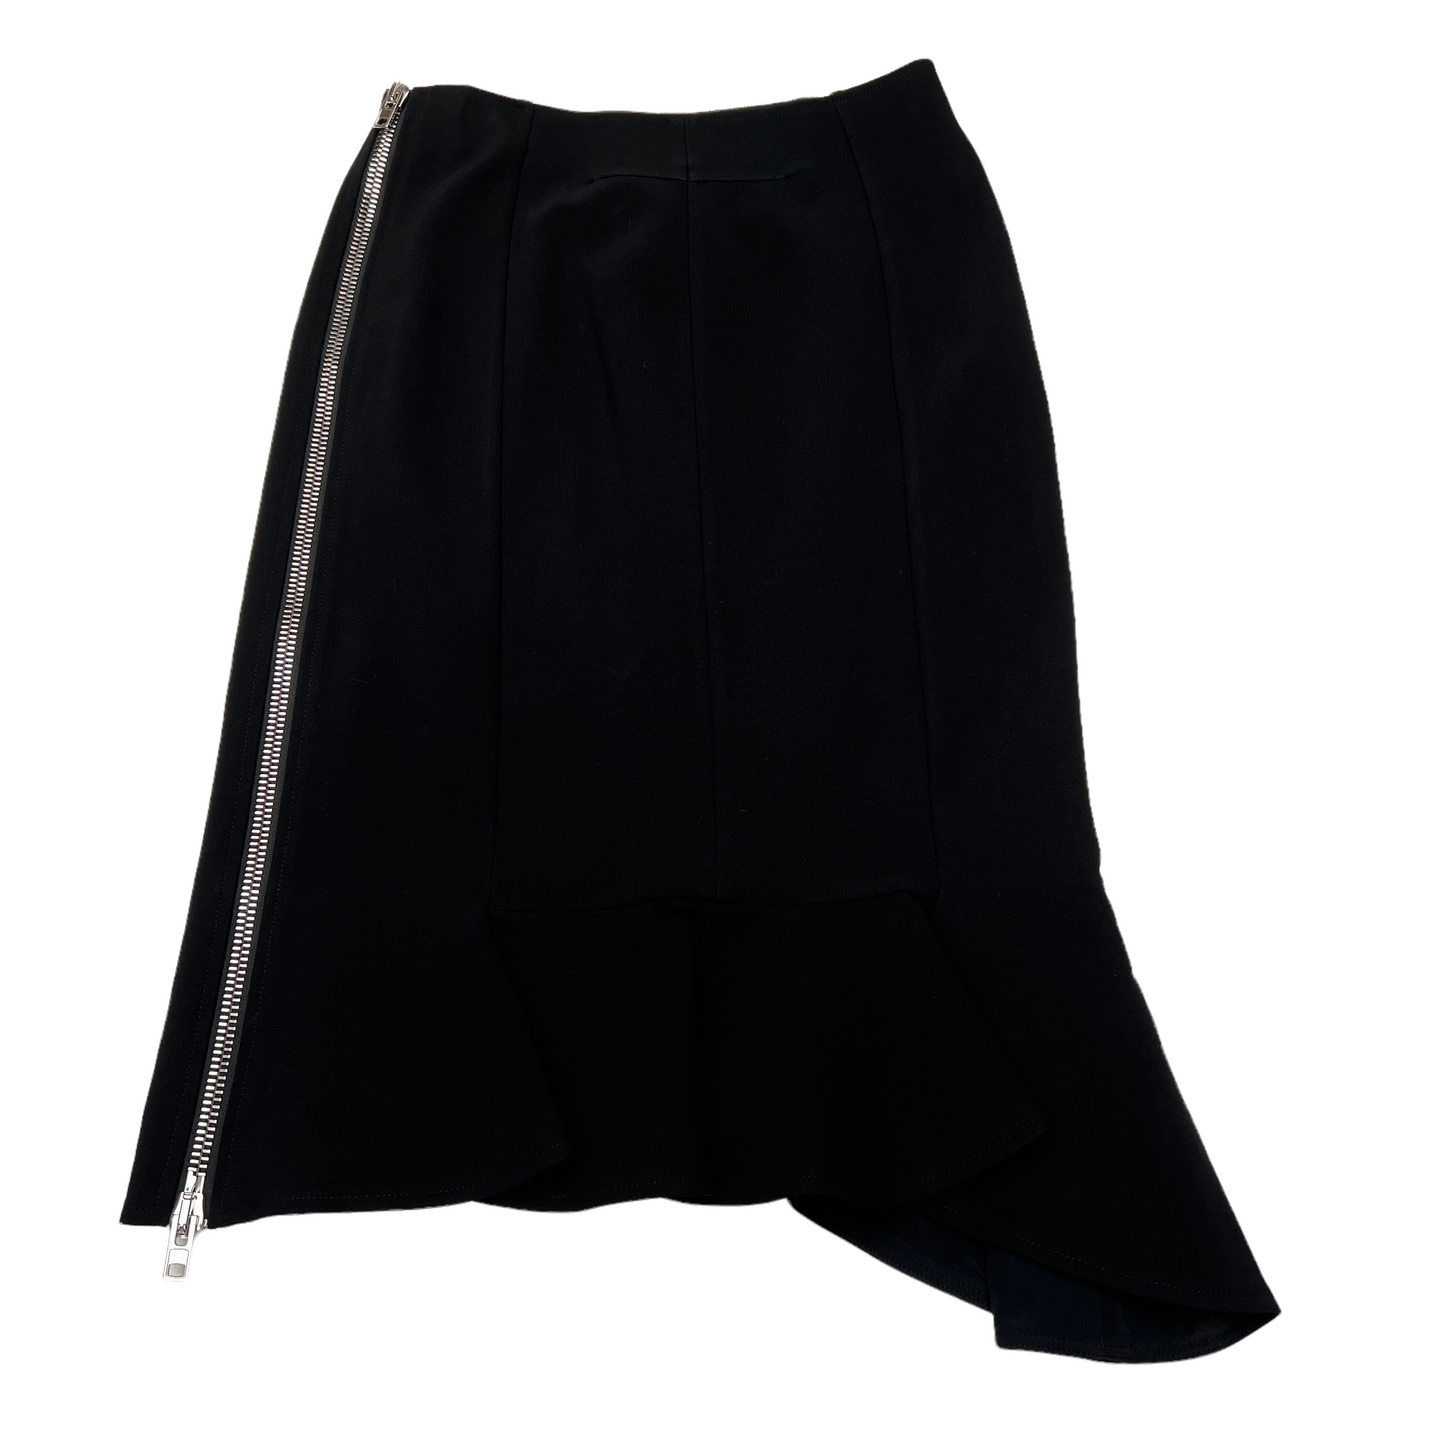 Black Skirt with Zipper - M